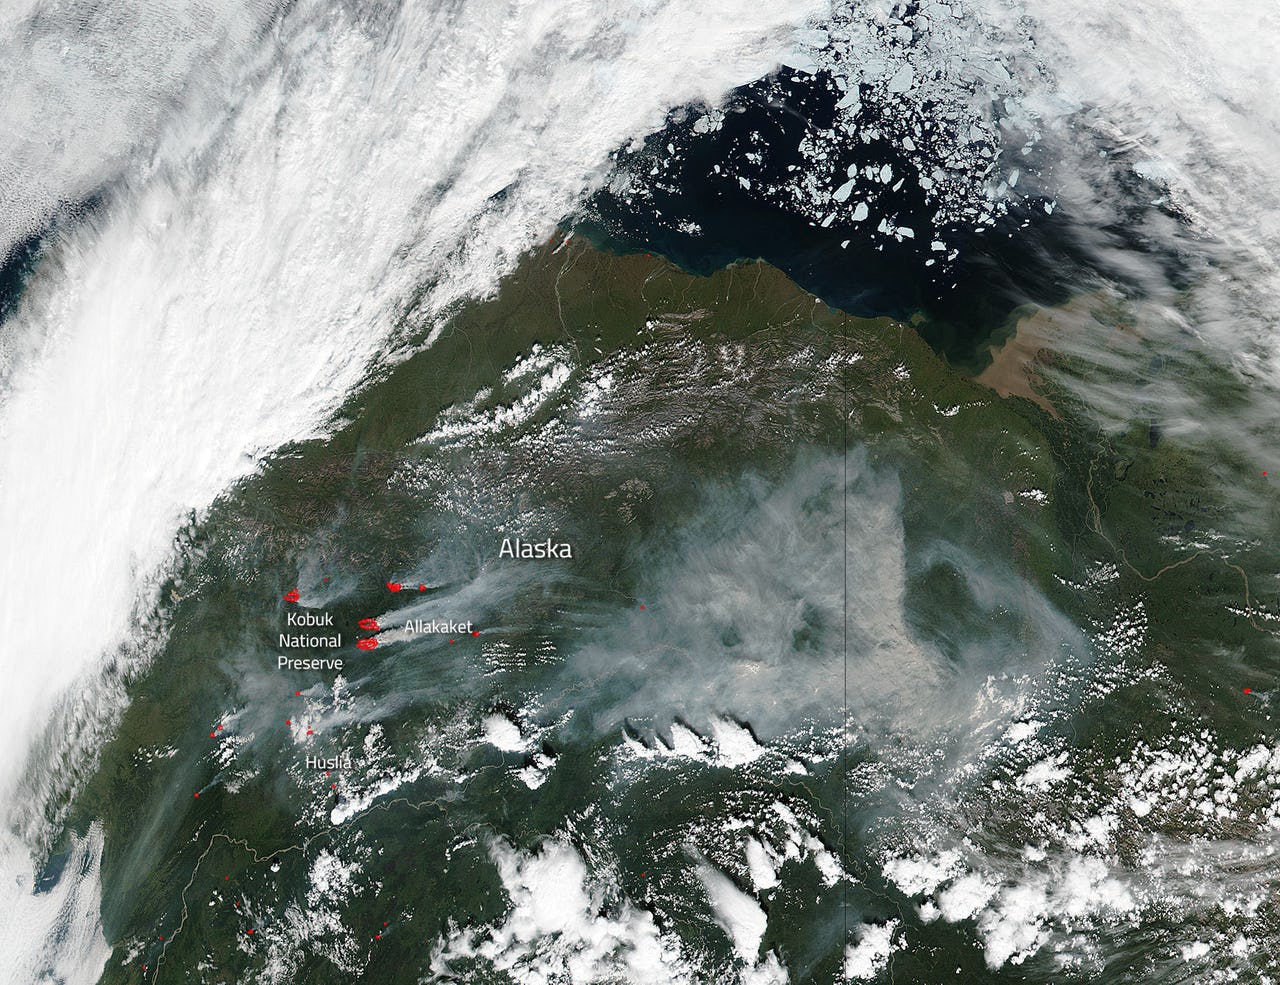 Satellite image showing wildfire in Alaska in 2016